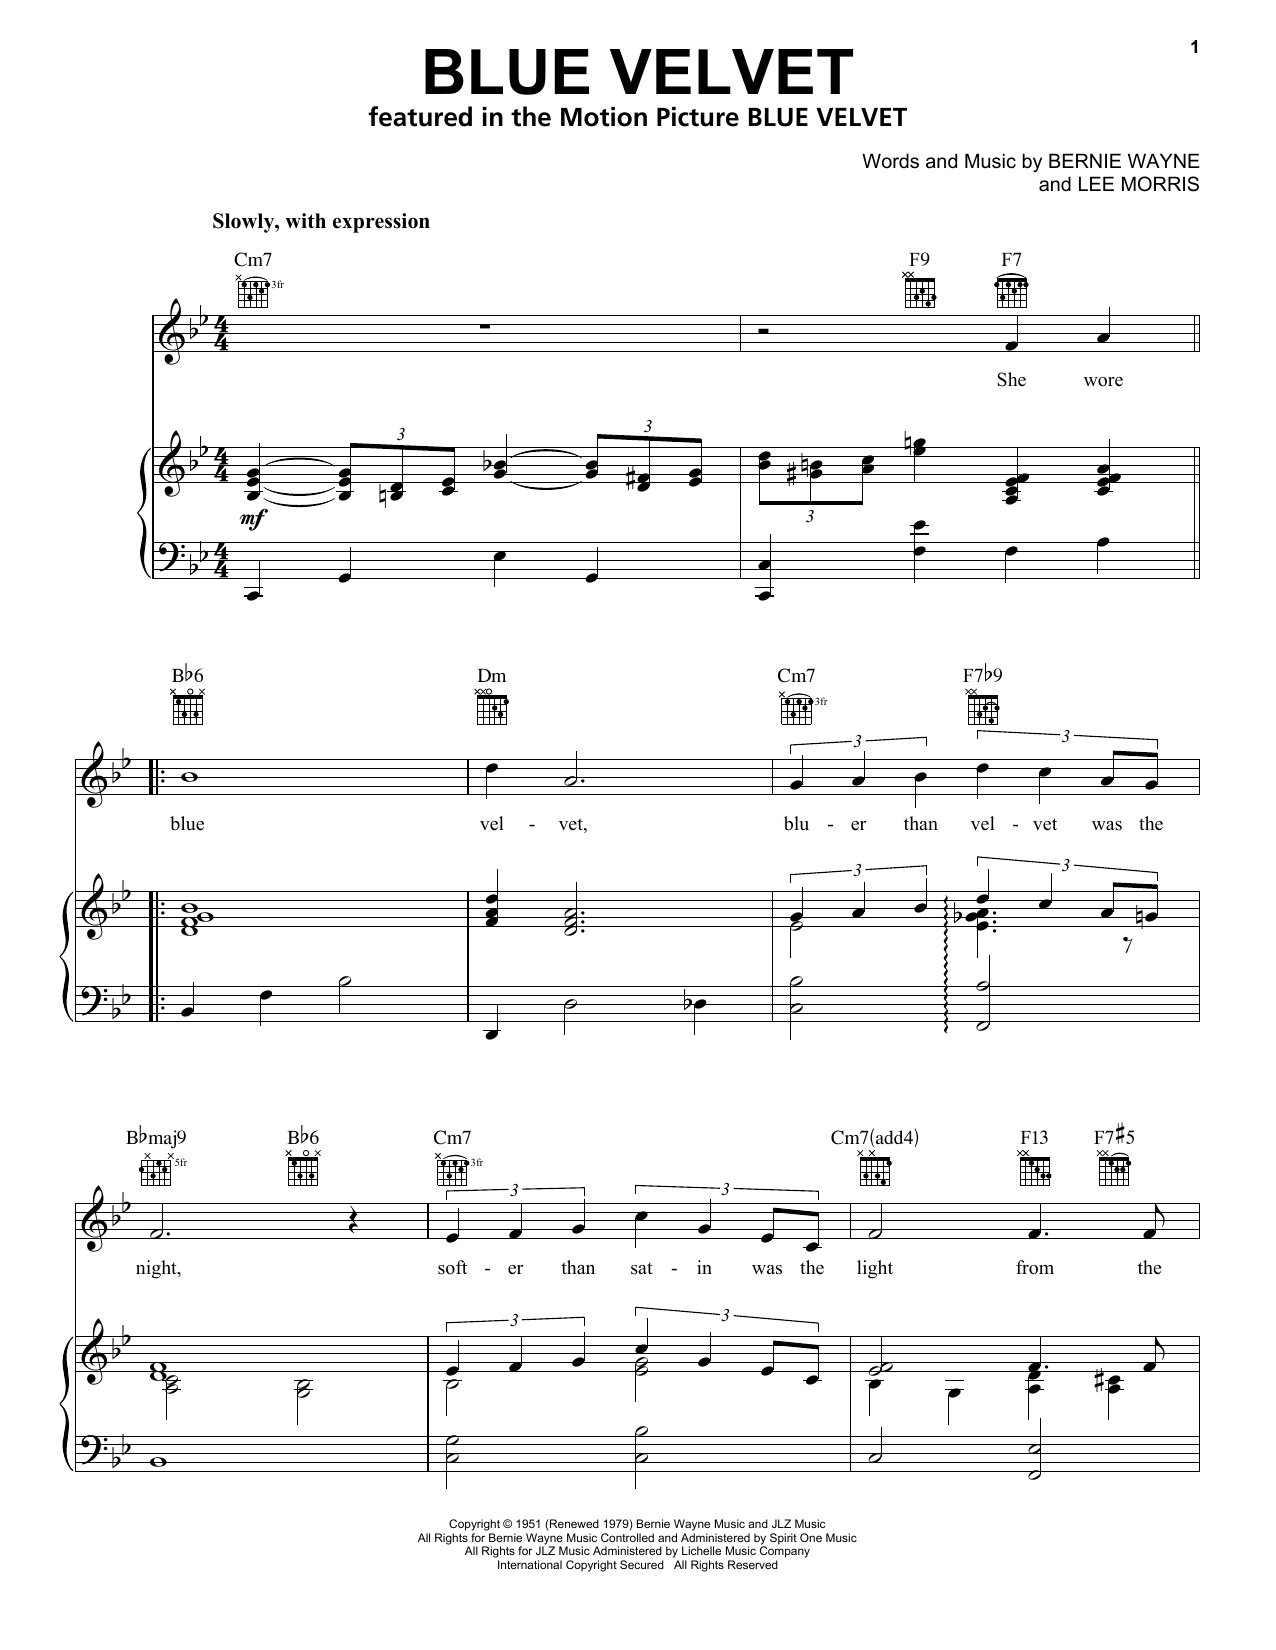 Bobby Vinton Blue Velvet Sheet Music Notes & Chords for Piano & Vocal - Download or Print PDF